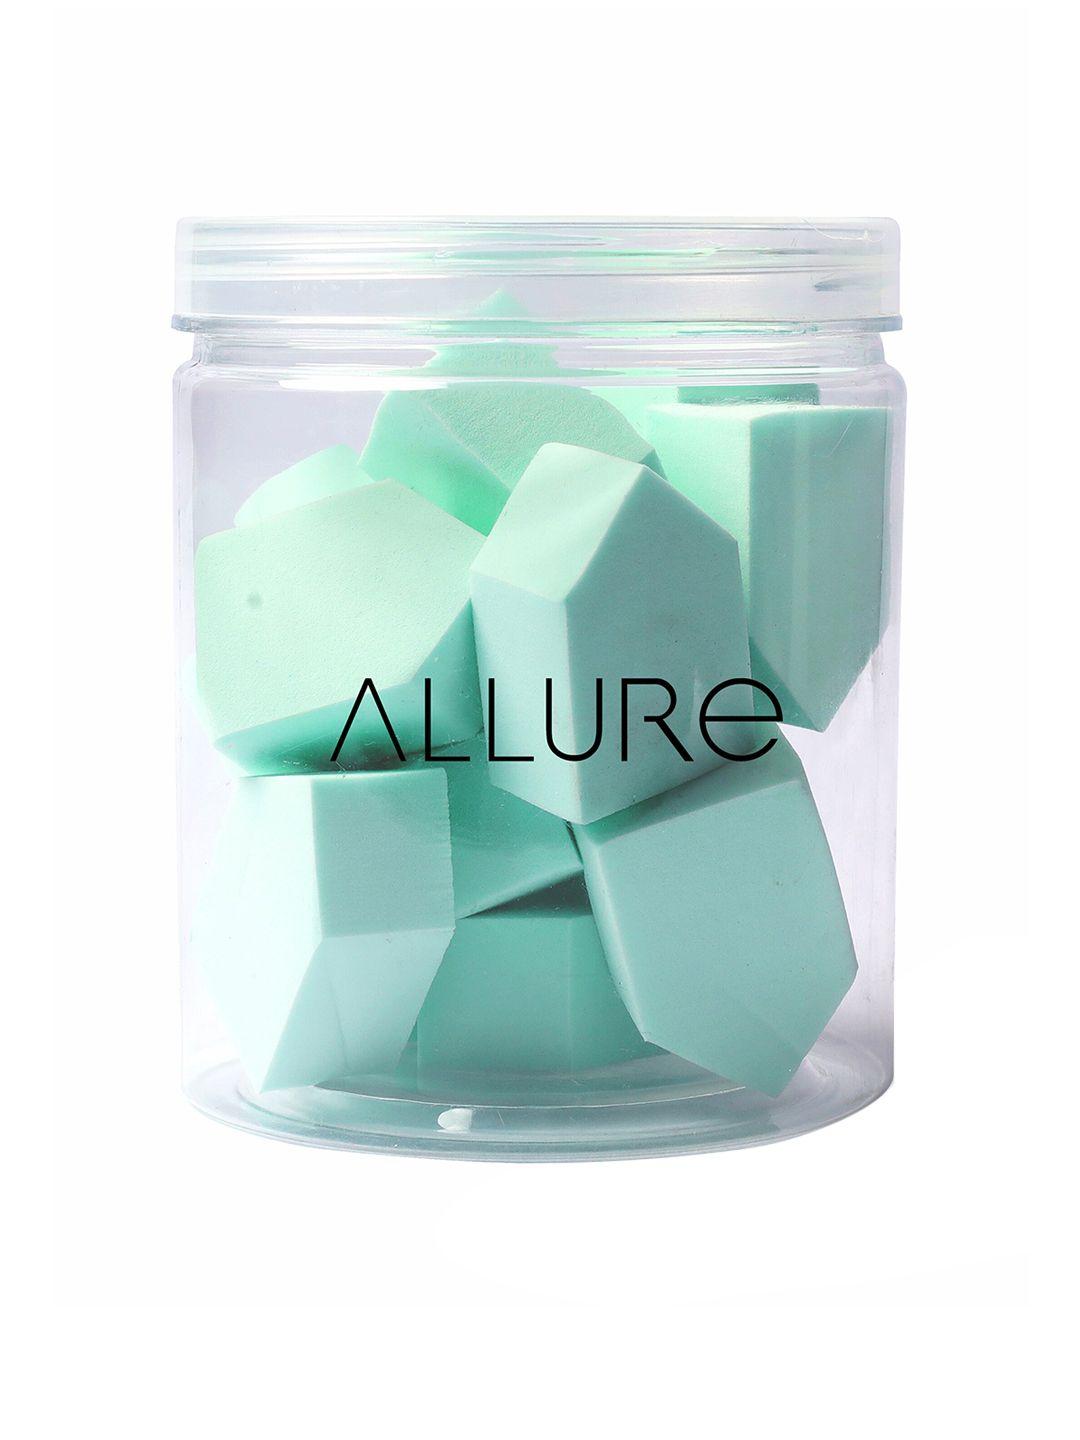 allure makeup sponge - 15 pcs